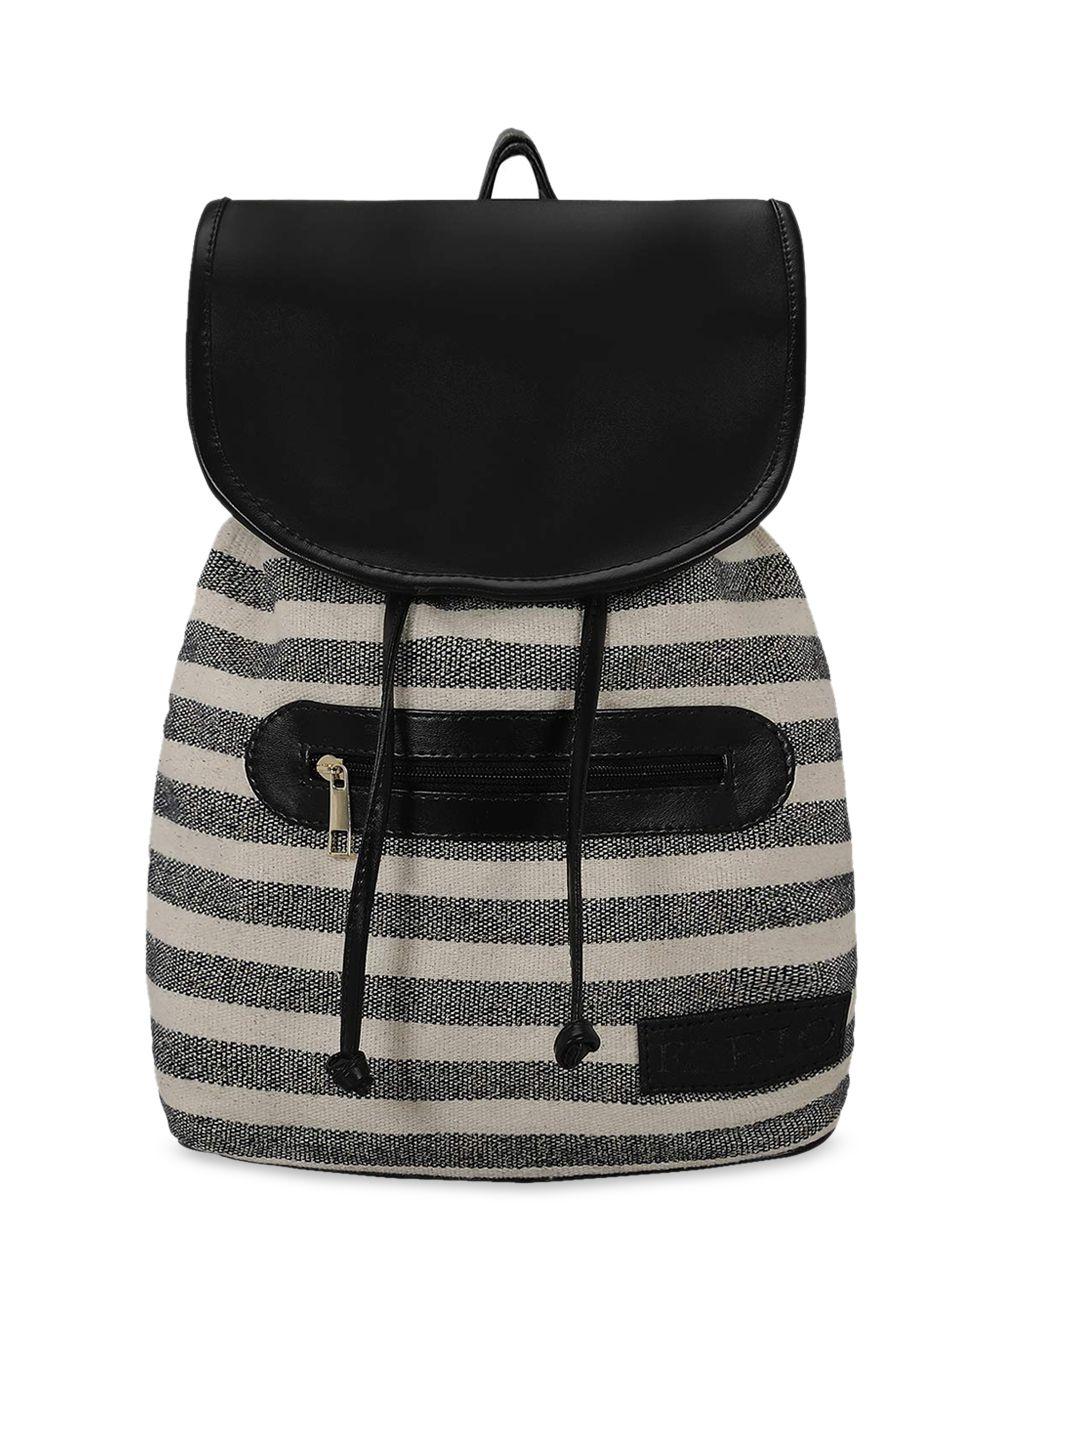 kleio women black & beige striped backpack